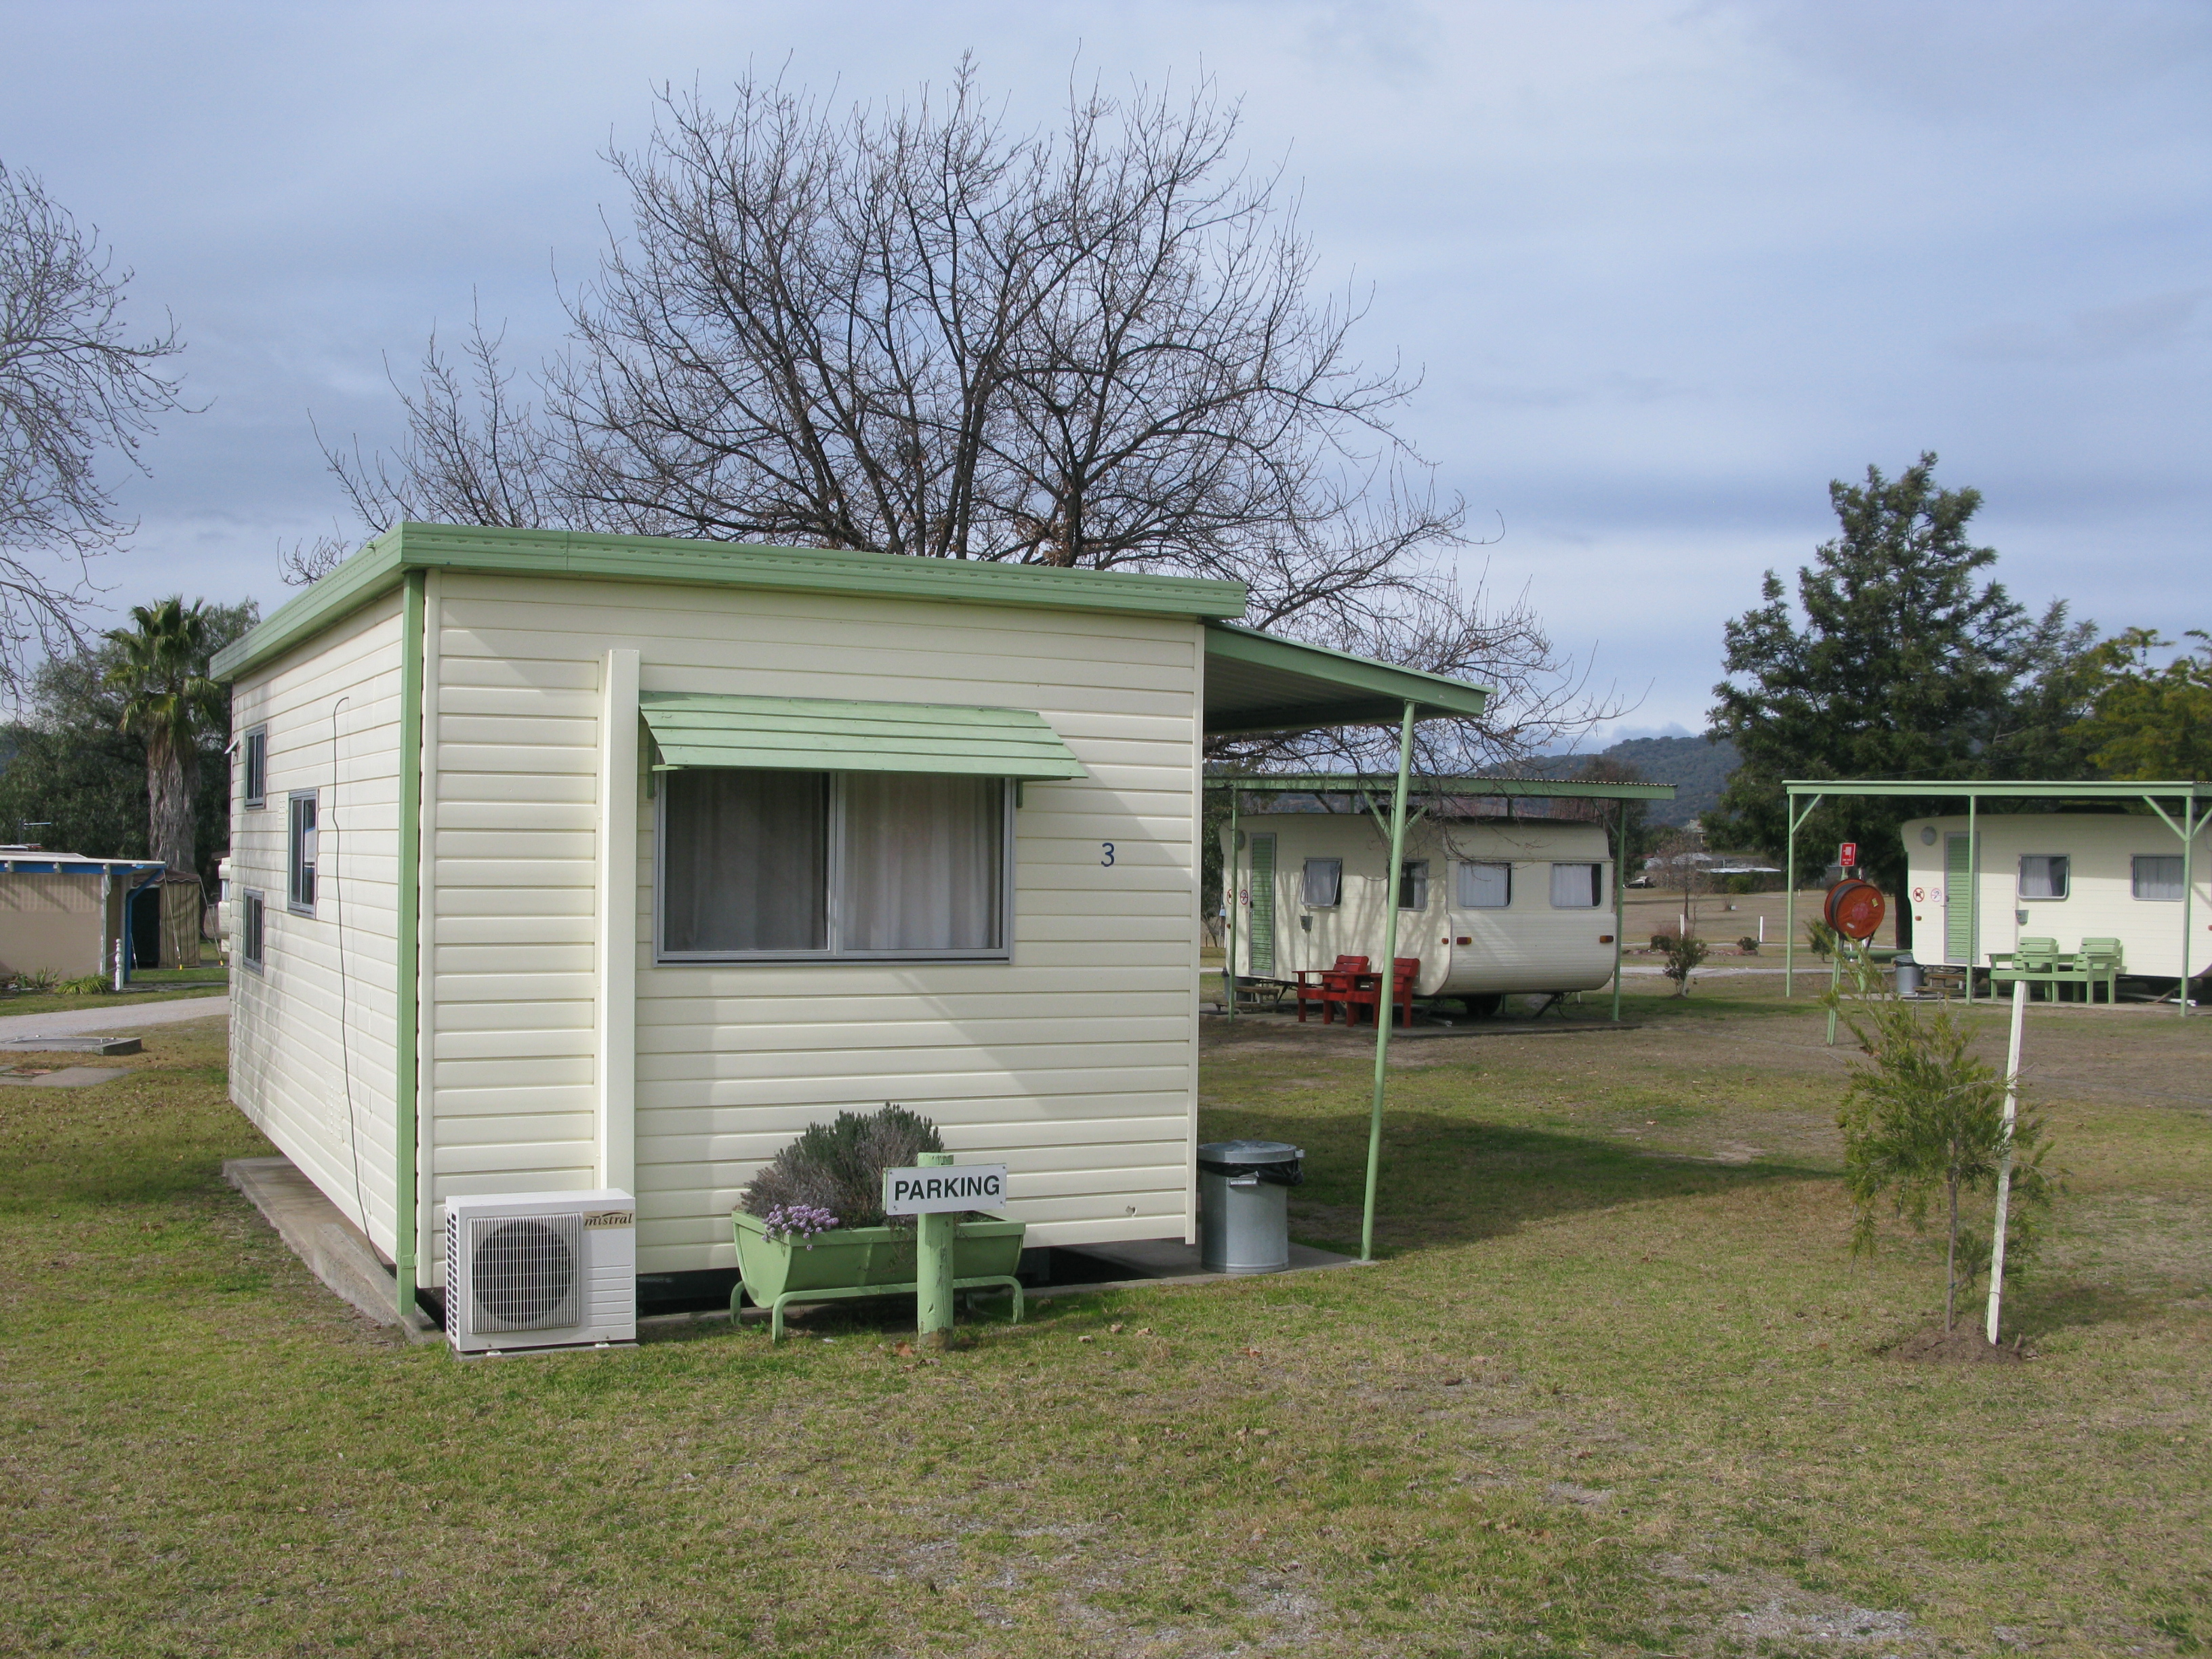 Kootingal Kourt Caravan Park - Kootingal: Cottage accommodation, ideal for families, couples and singles